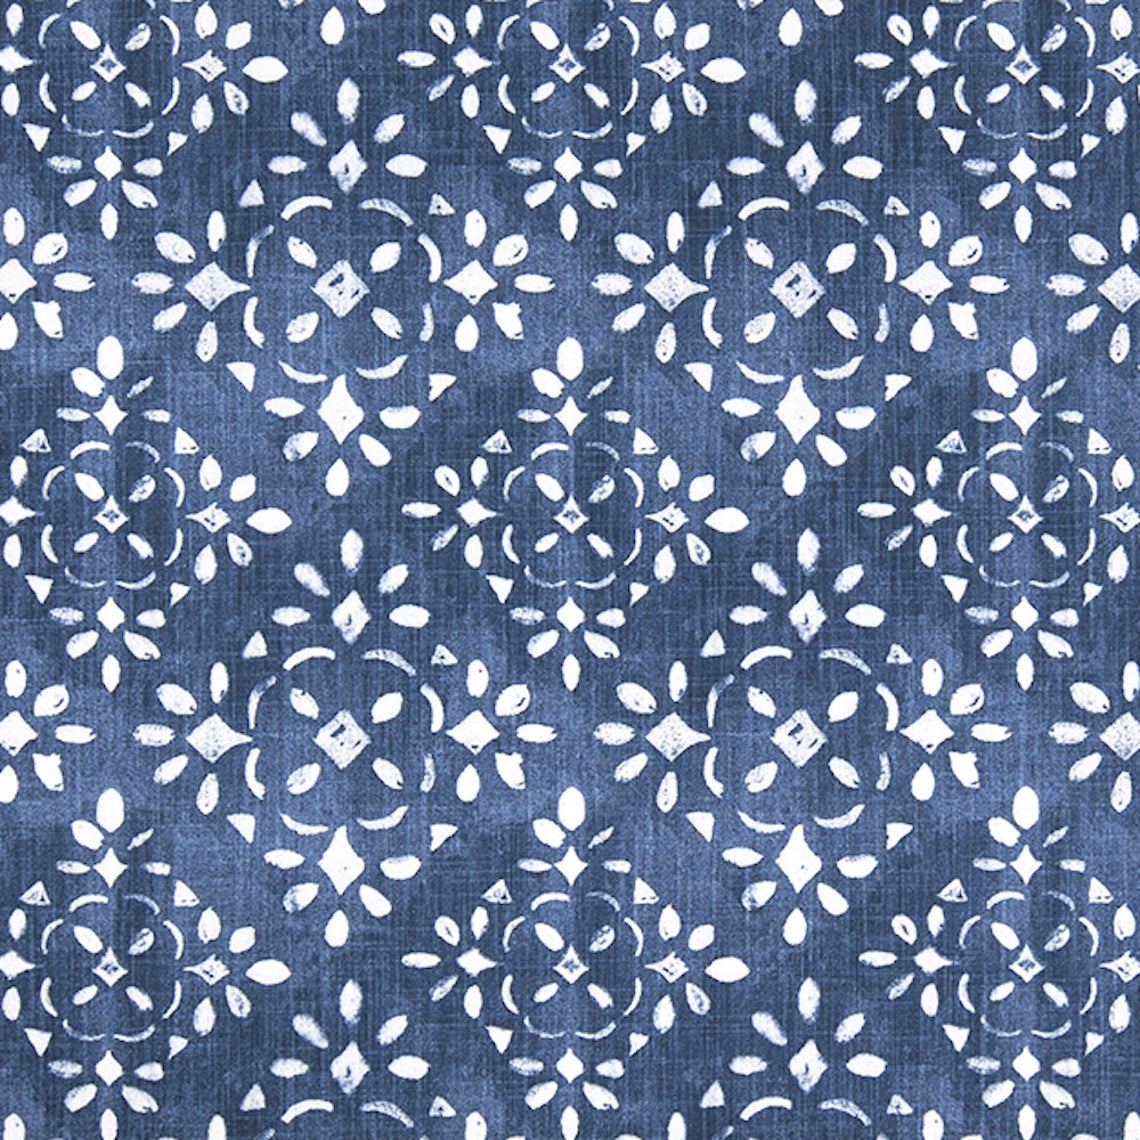 duvet cover in avila prussian blue farmhouse floral lattice